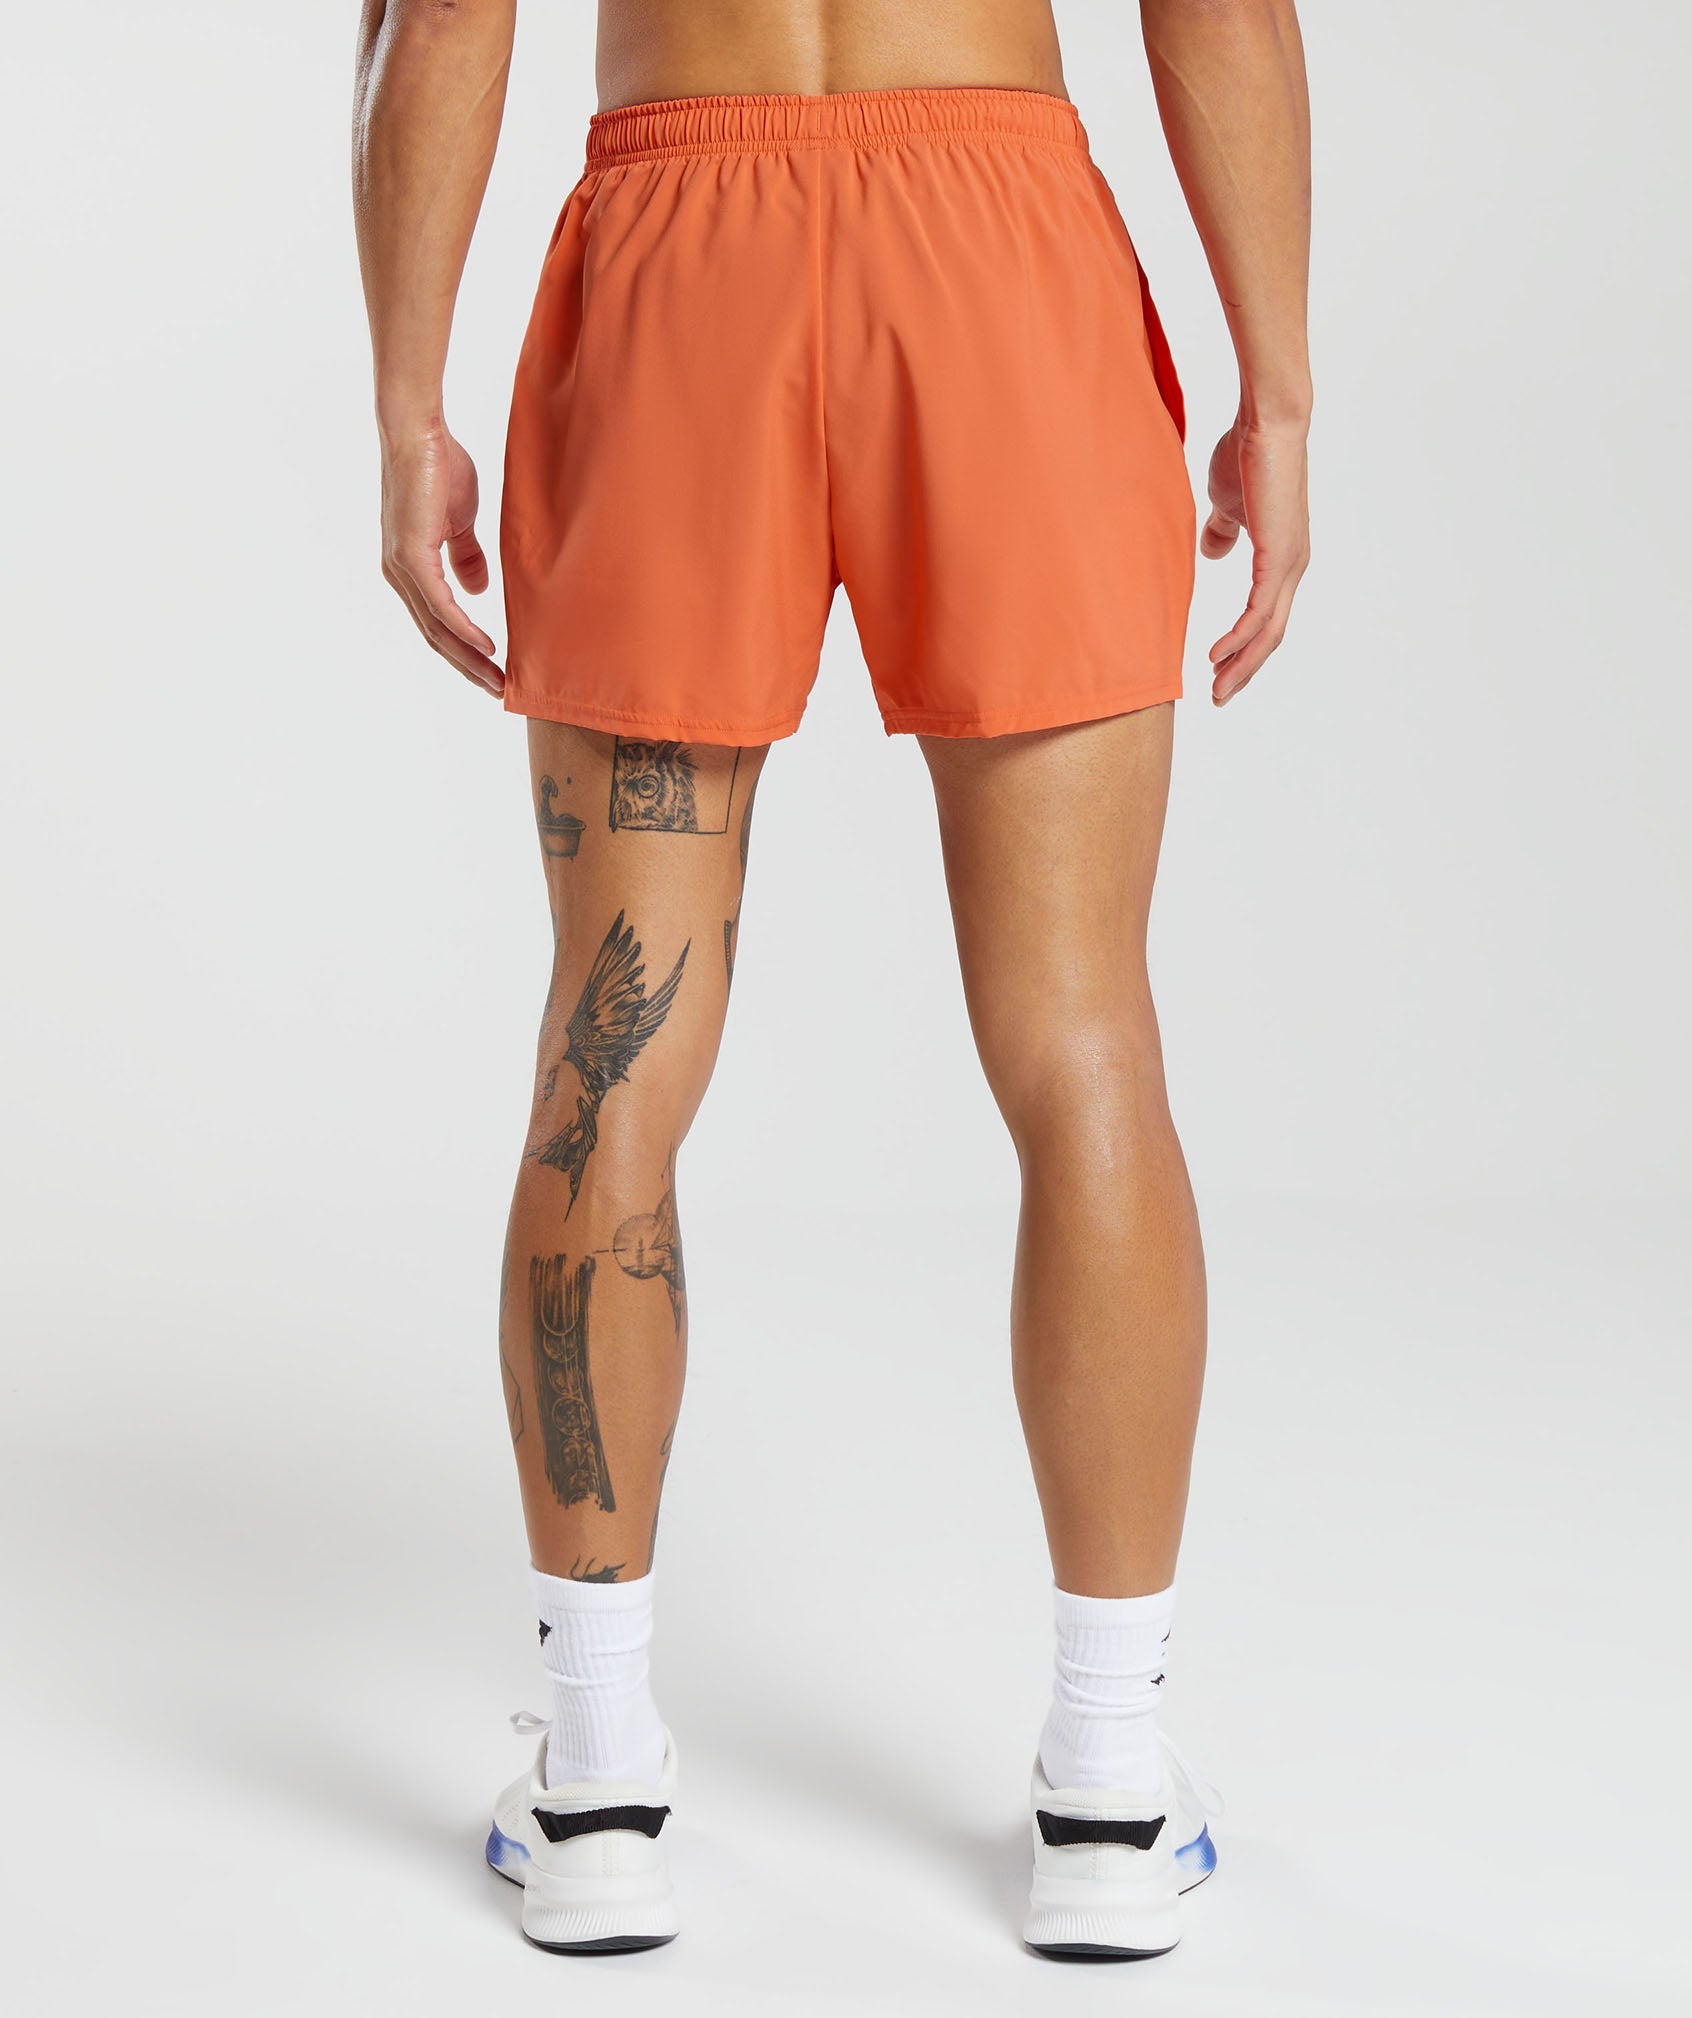 Arrival 5" Shorts in Ignite Orange - view 2